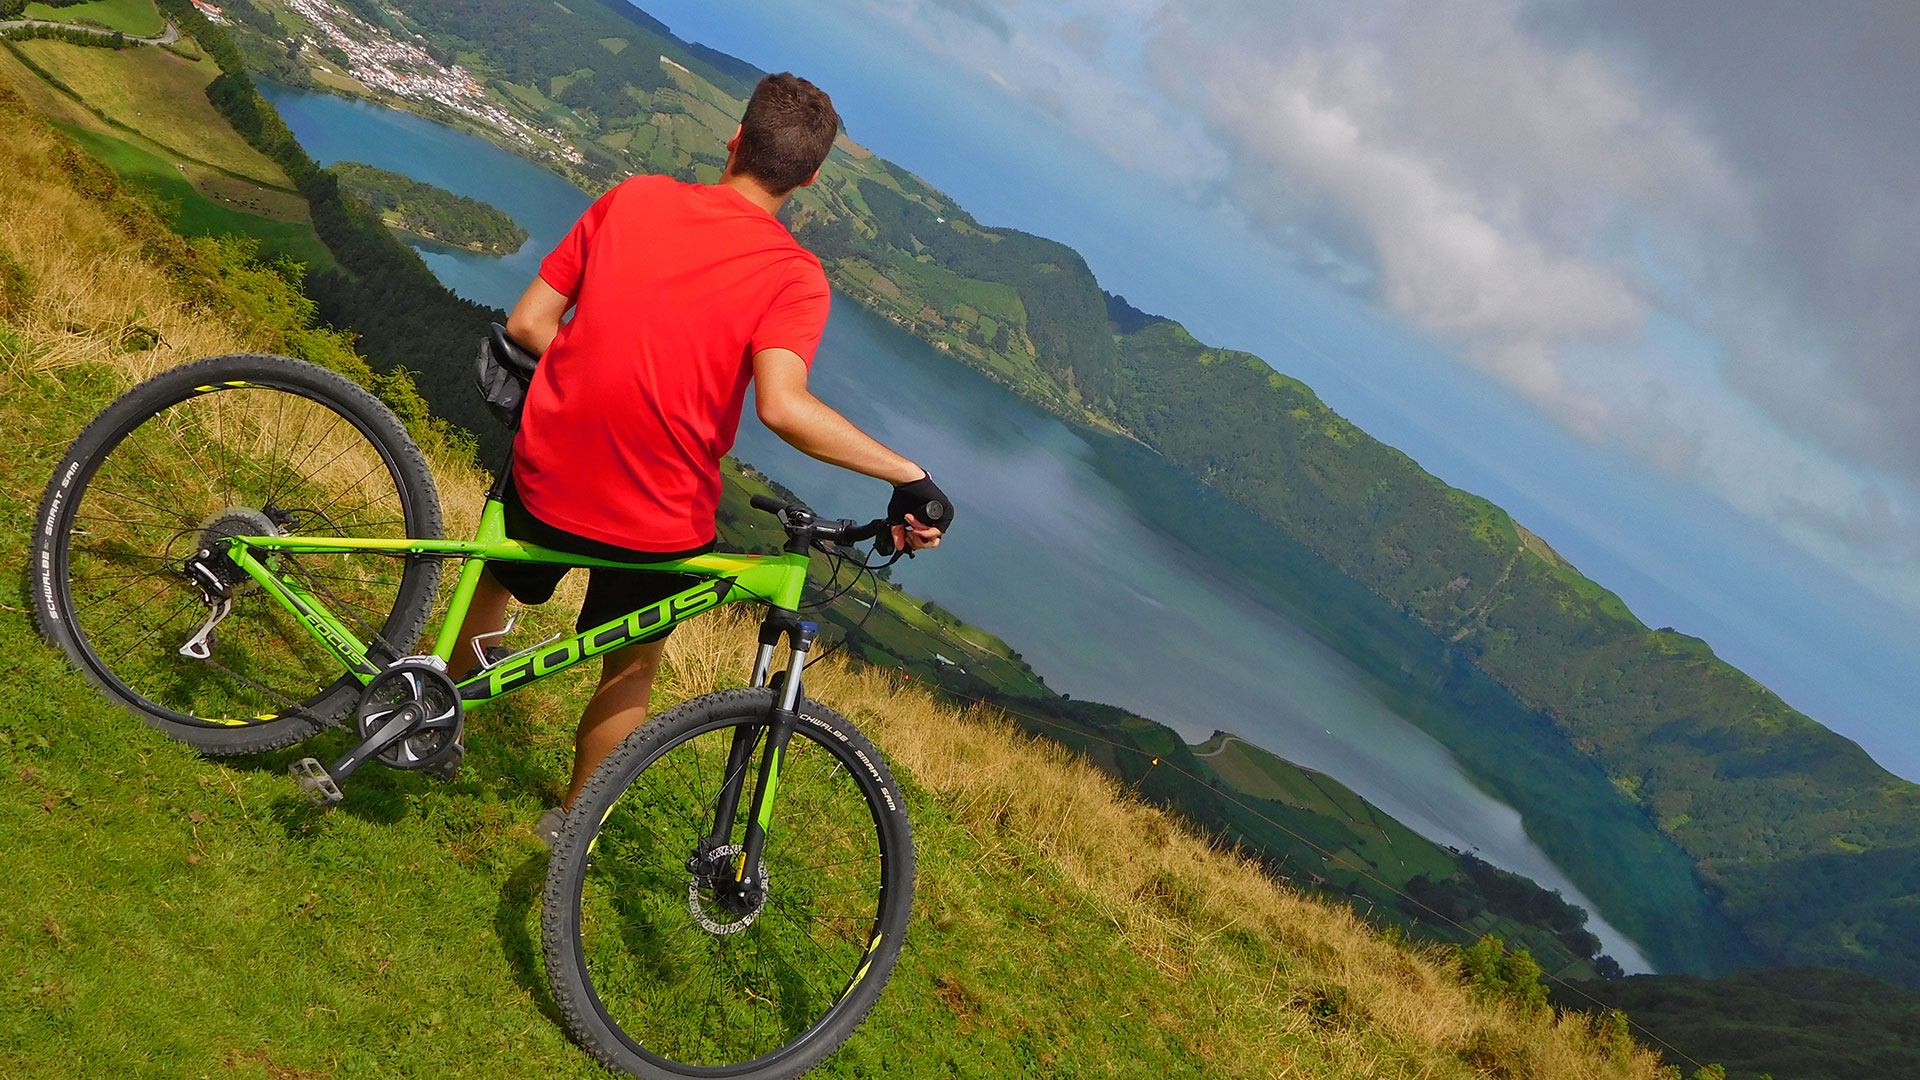 Azores - Sete Cidades. Bike & Kayak